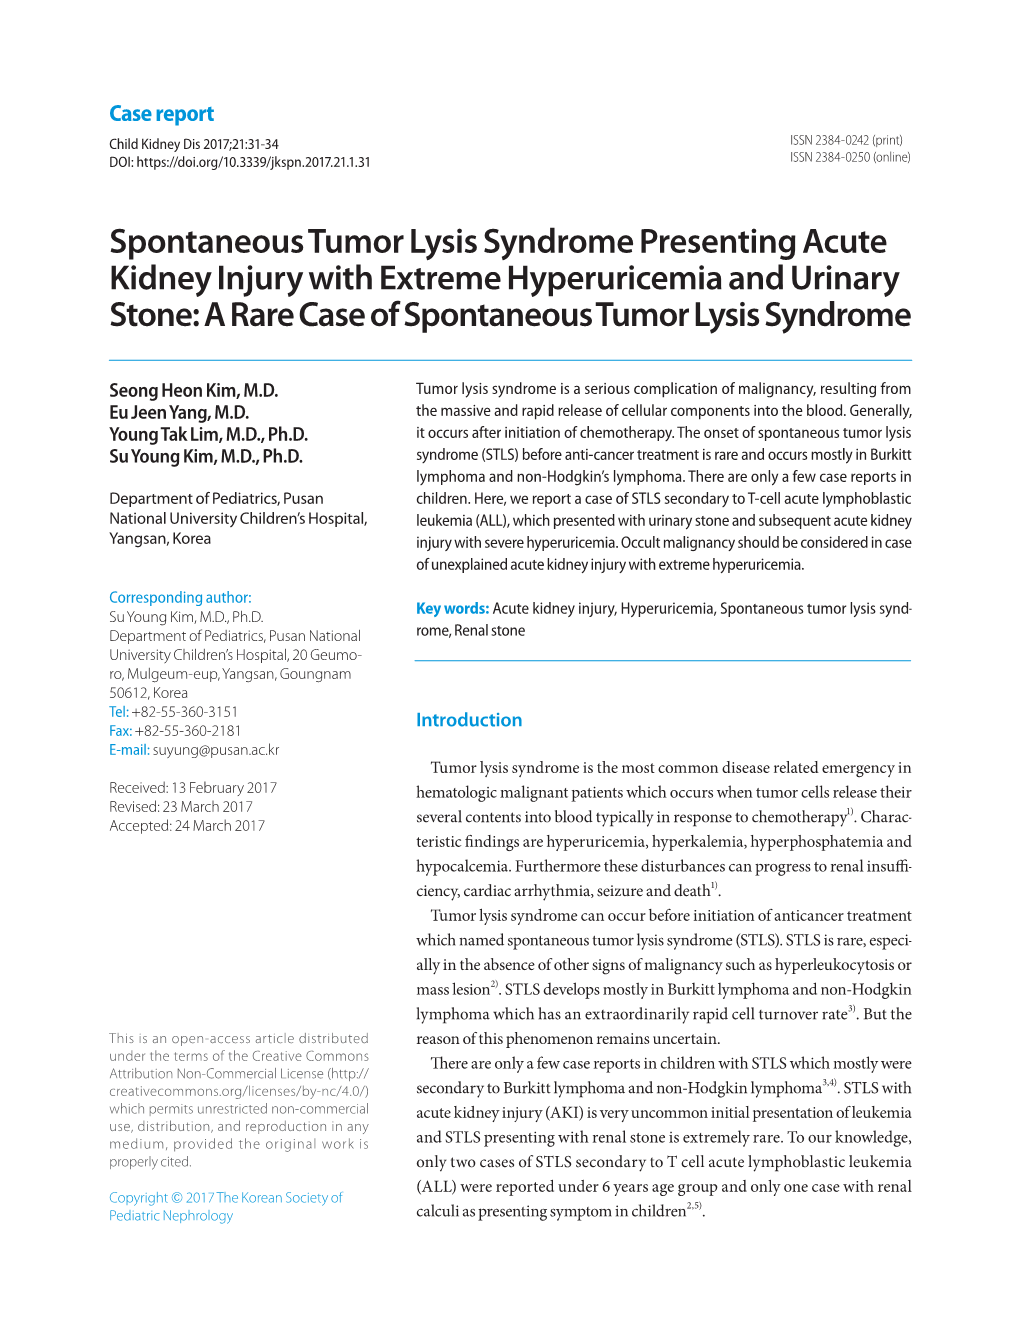 Spontaneous Tumor Lysis Syndrome Presenting Acute Kidney Injury with Extreme Hyperuricemia and Urinary Stone: a Rare Case of Spontaneous Tumor Lysis Syndrome